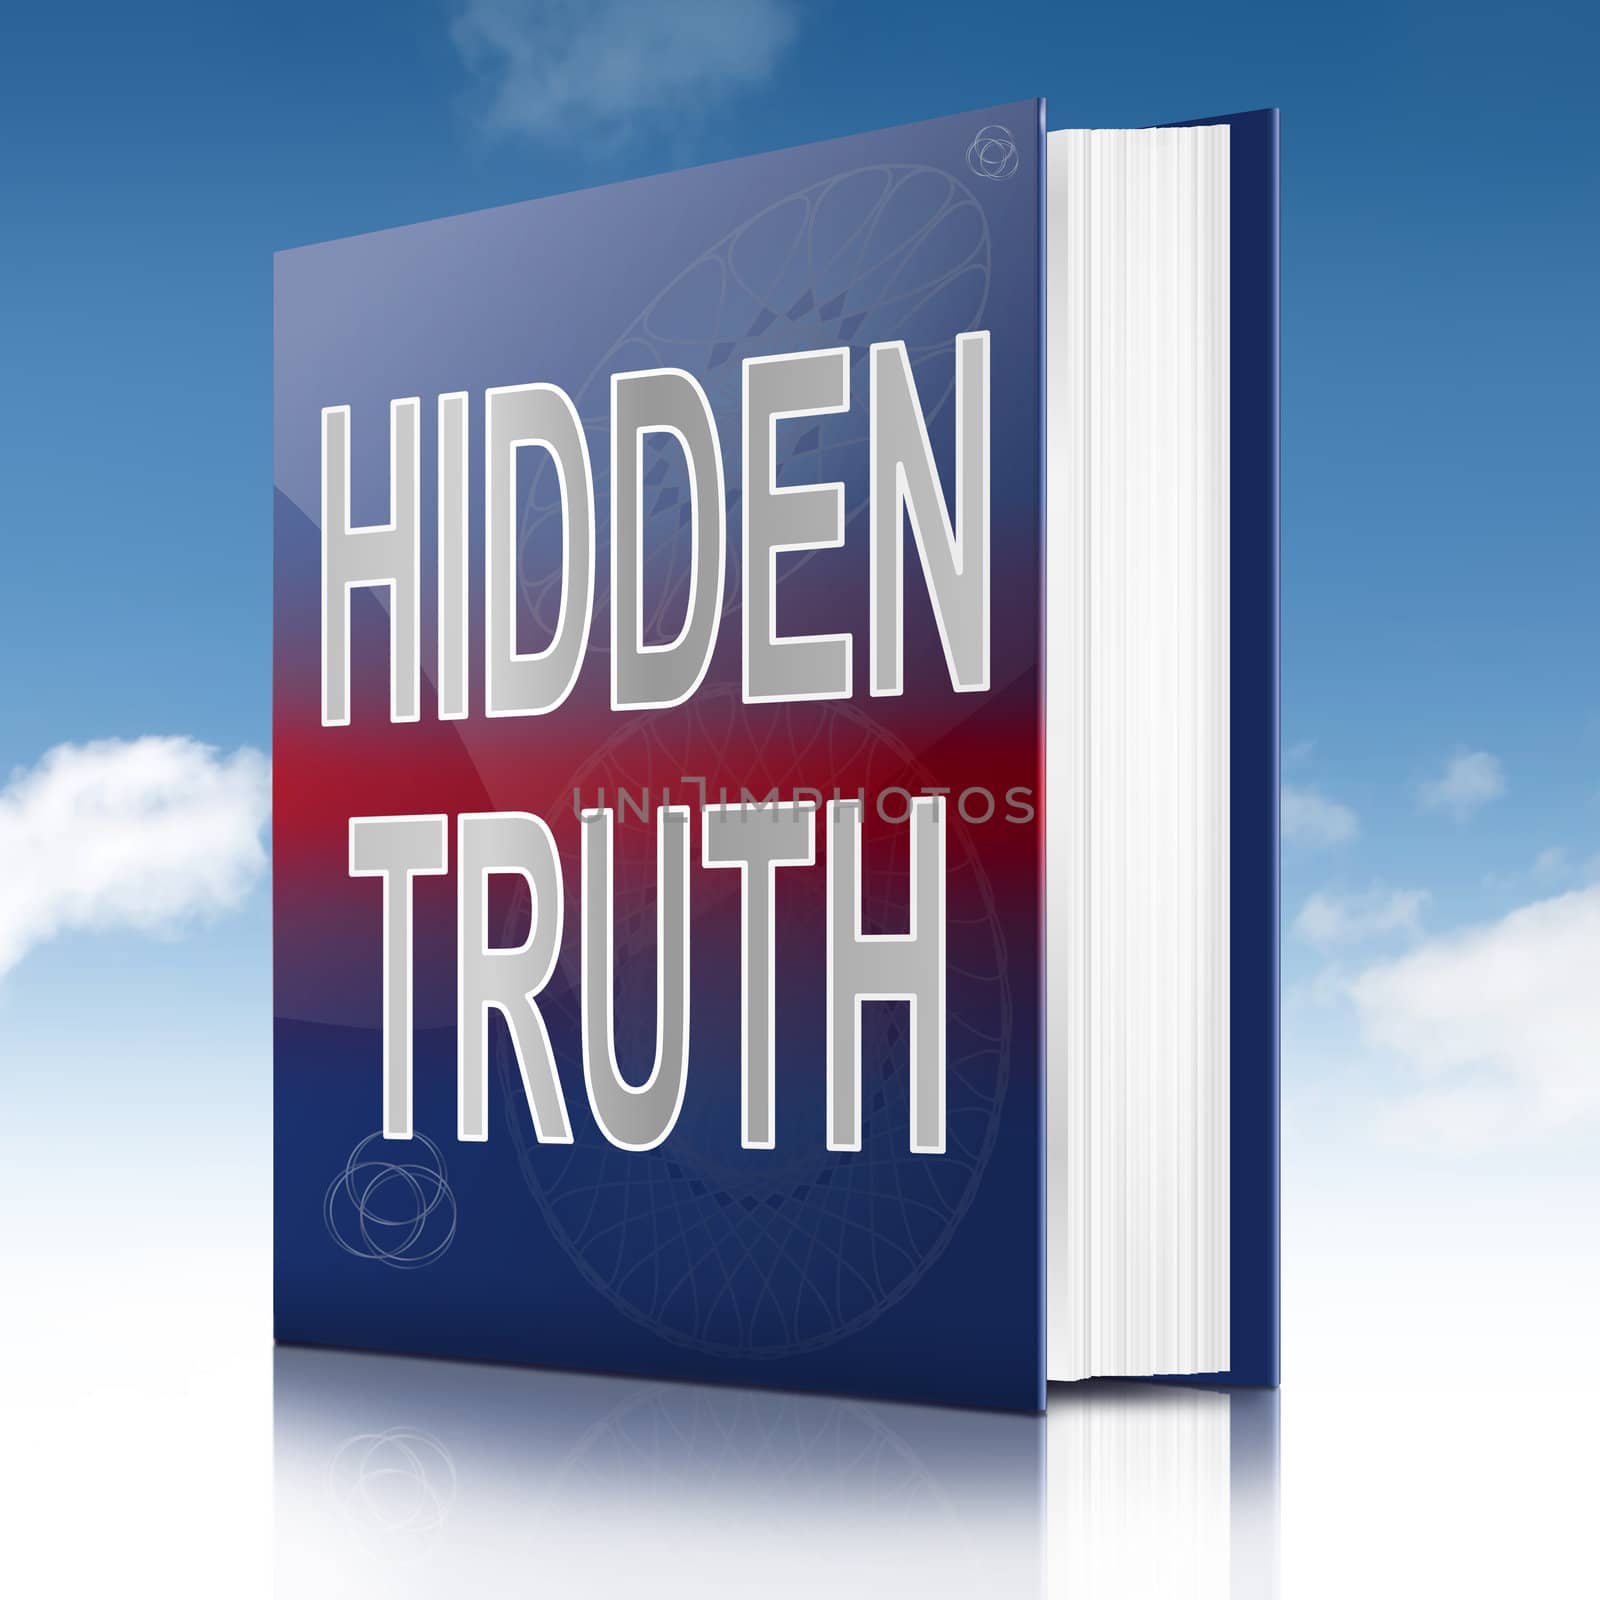 Hidden truth. by 72soul